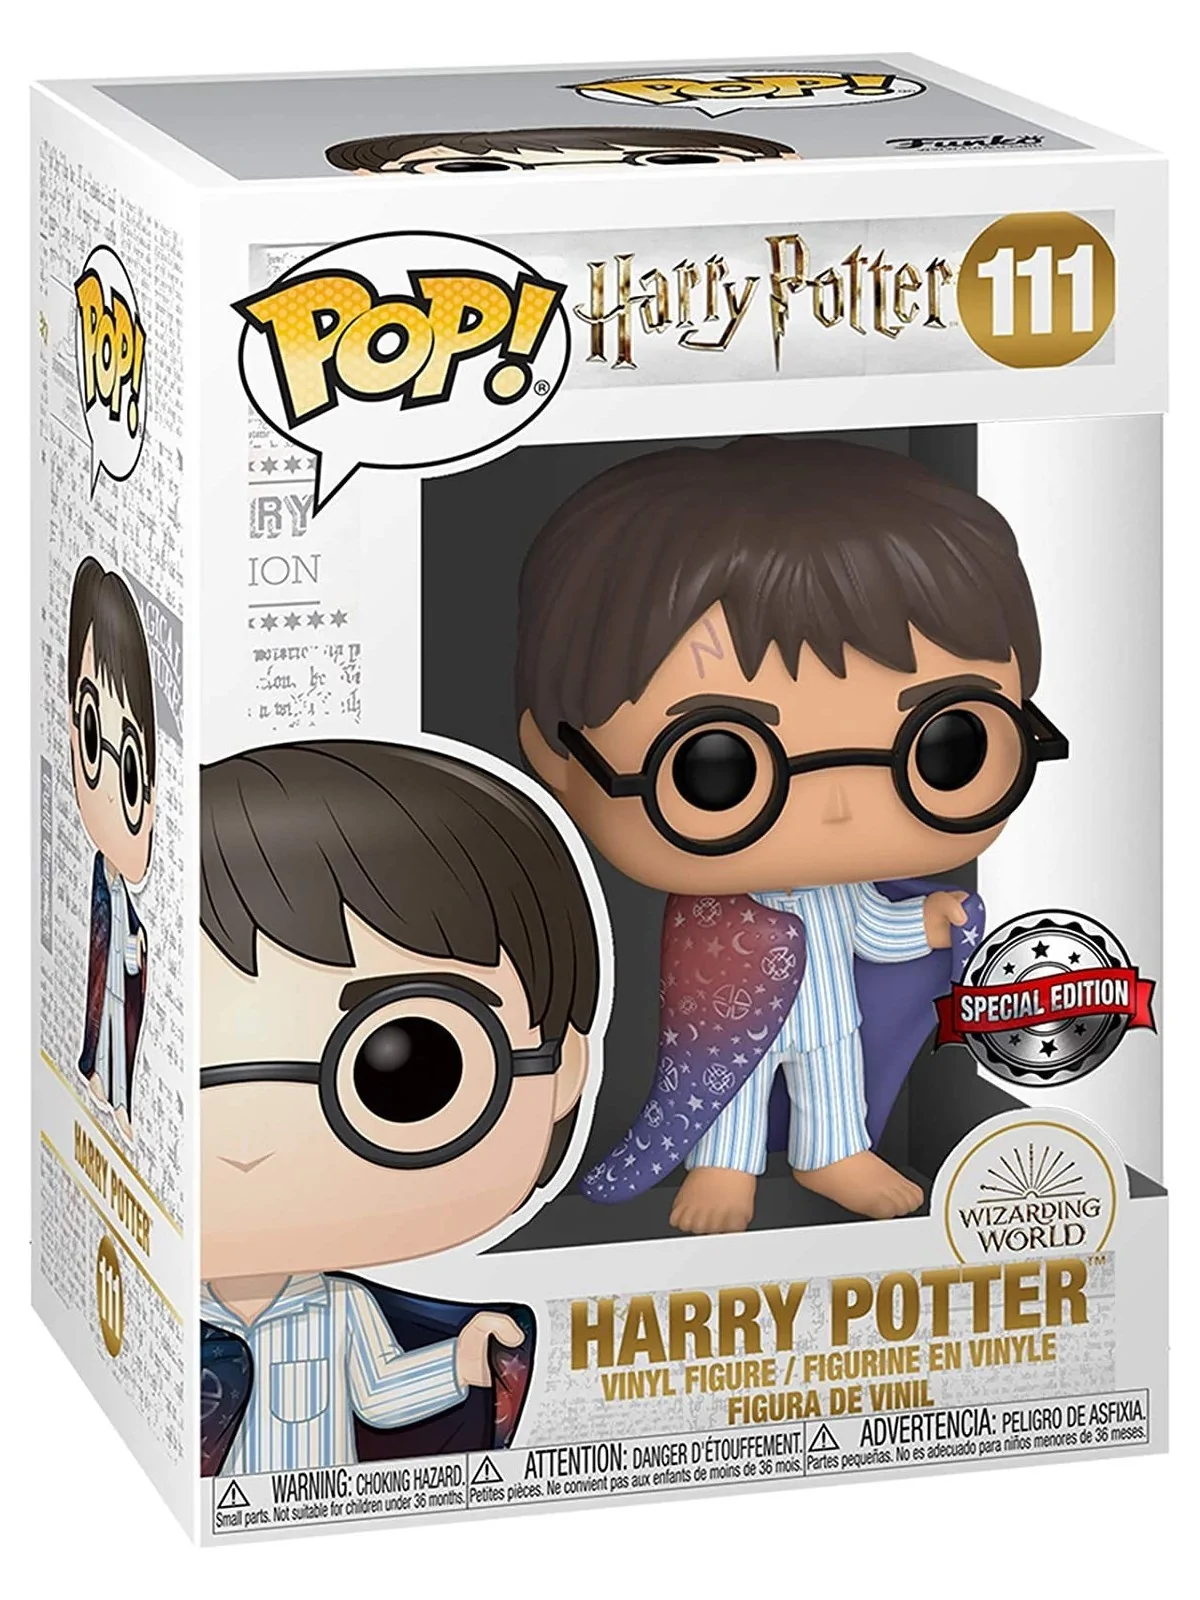 Comprar Funko Pop Harry Potter Capa de Invisibilidad Ed. Limitada (111